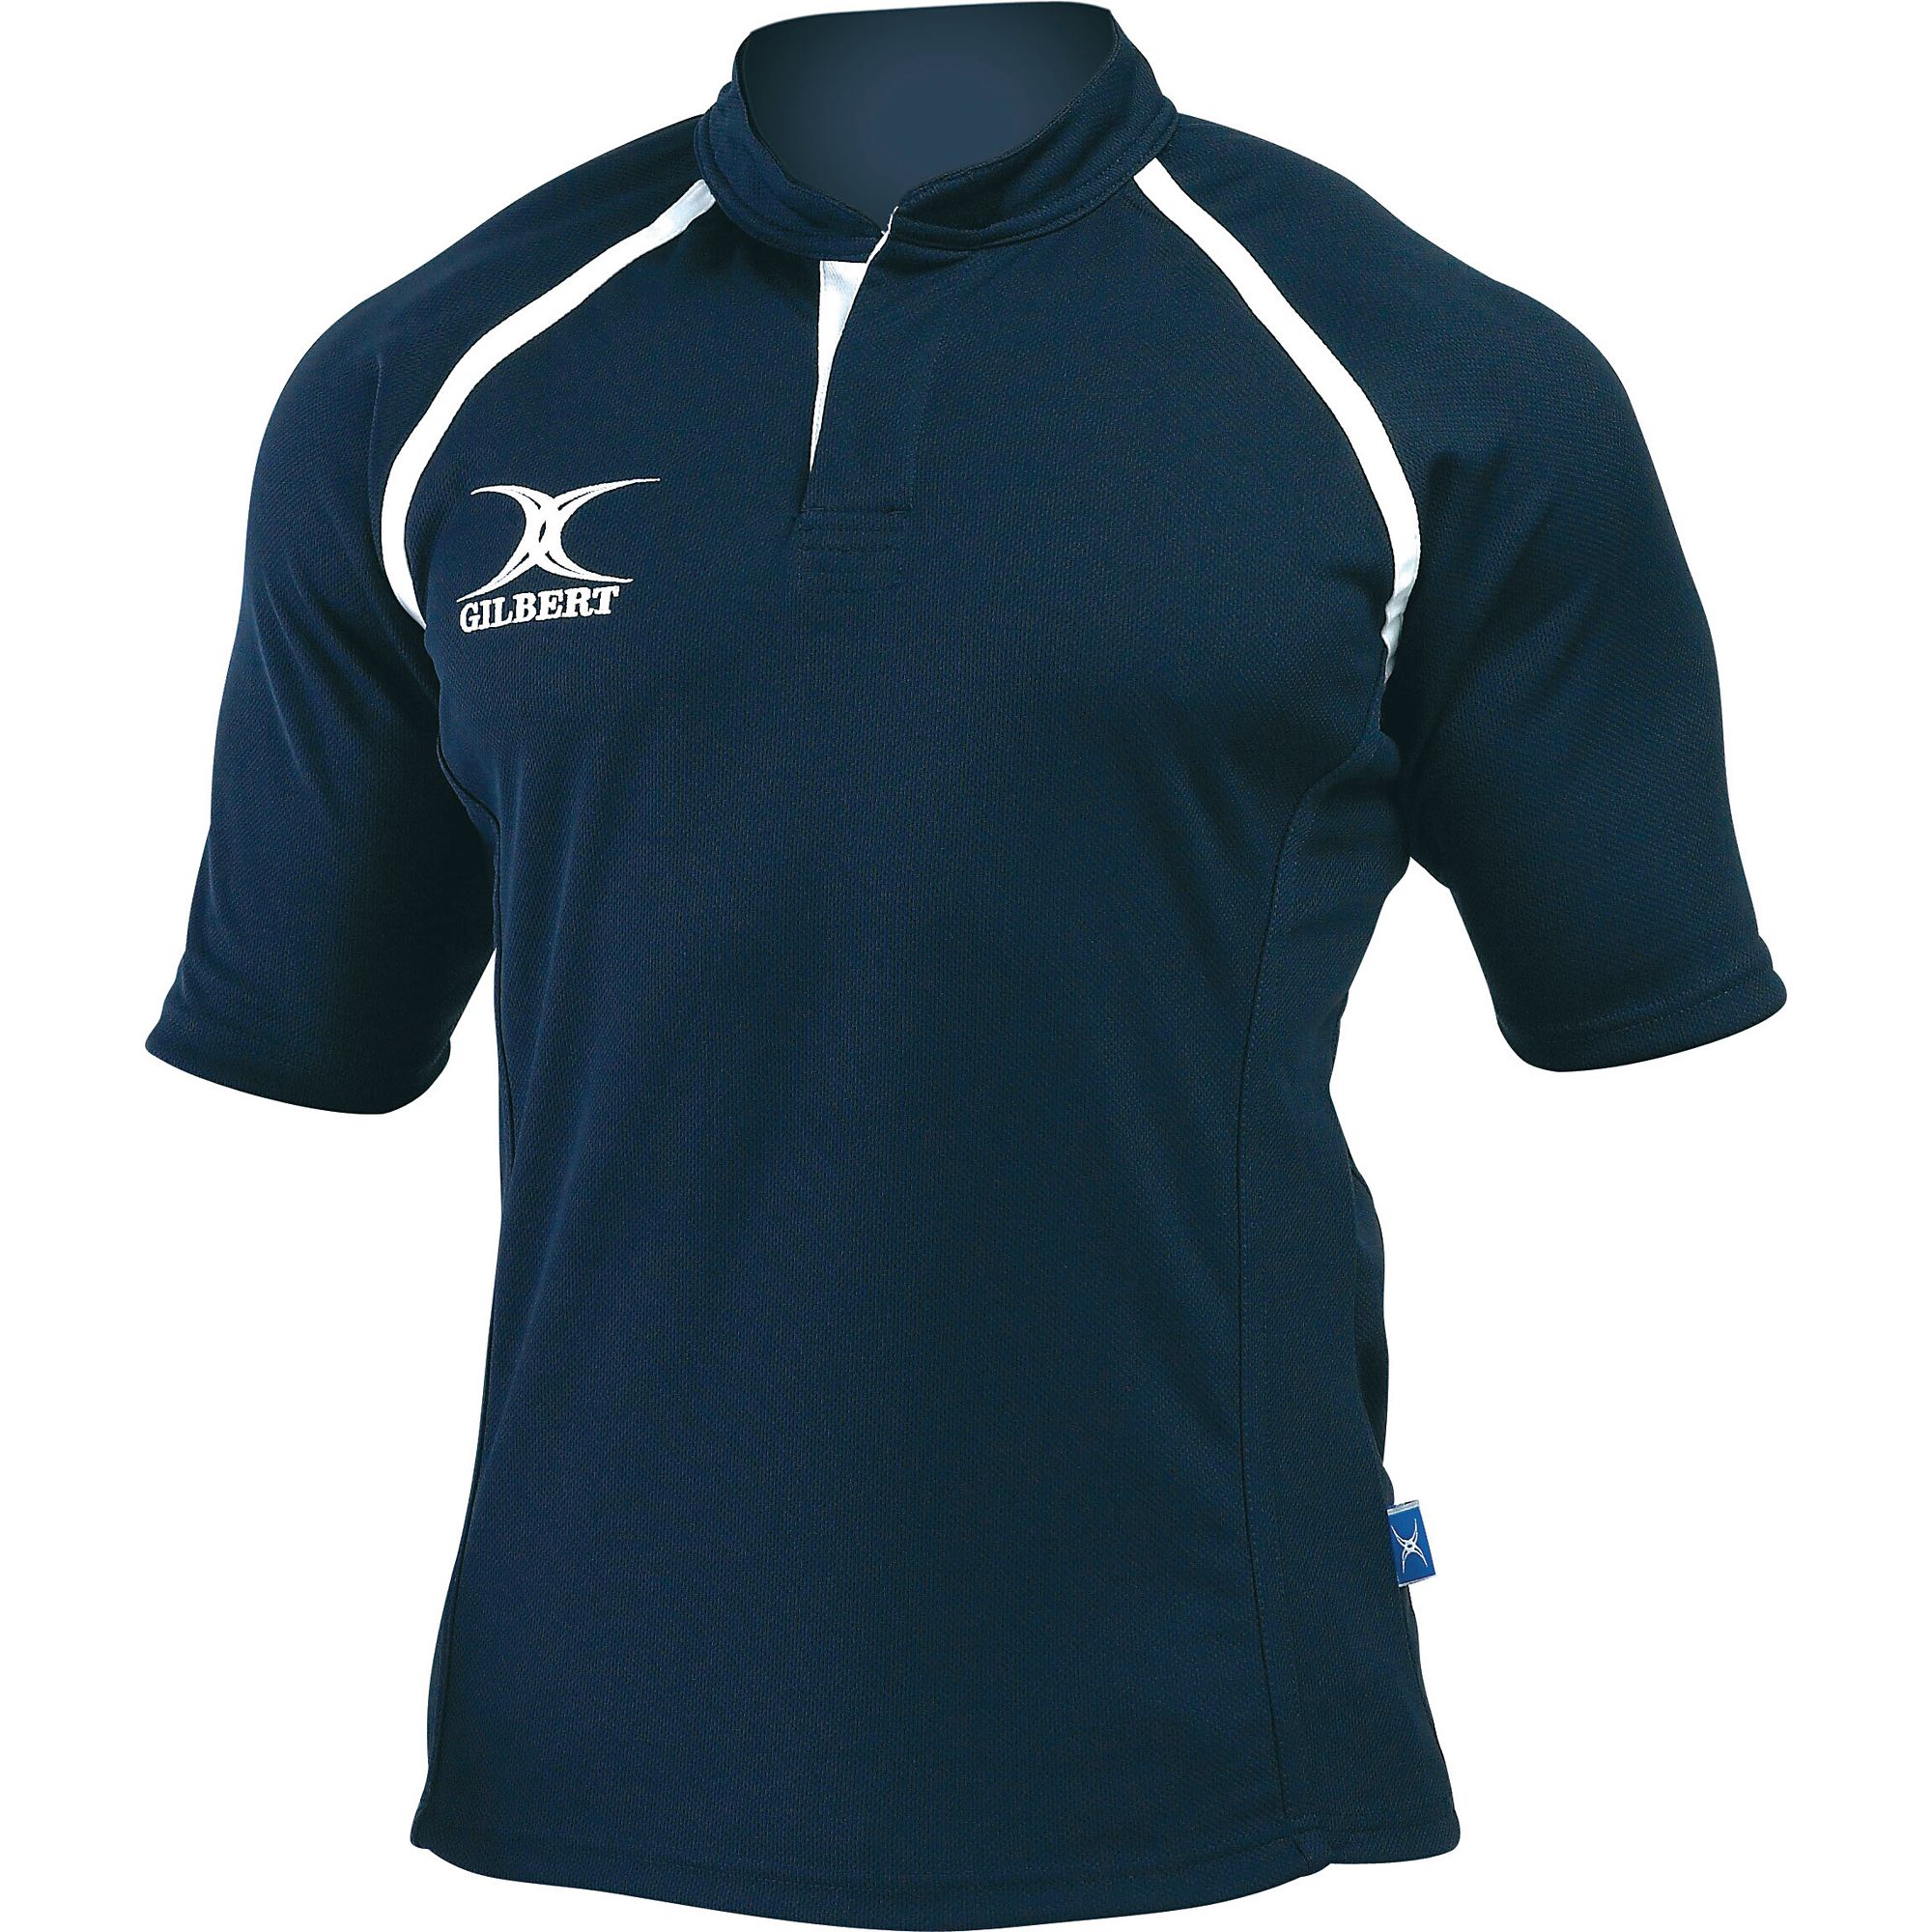 Gilbert Plain Rugby Shirt Mens 42in Navy